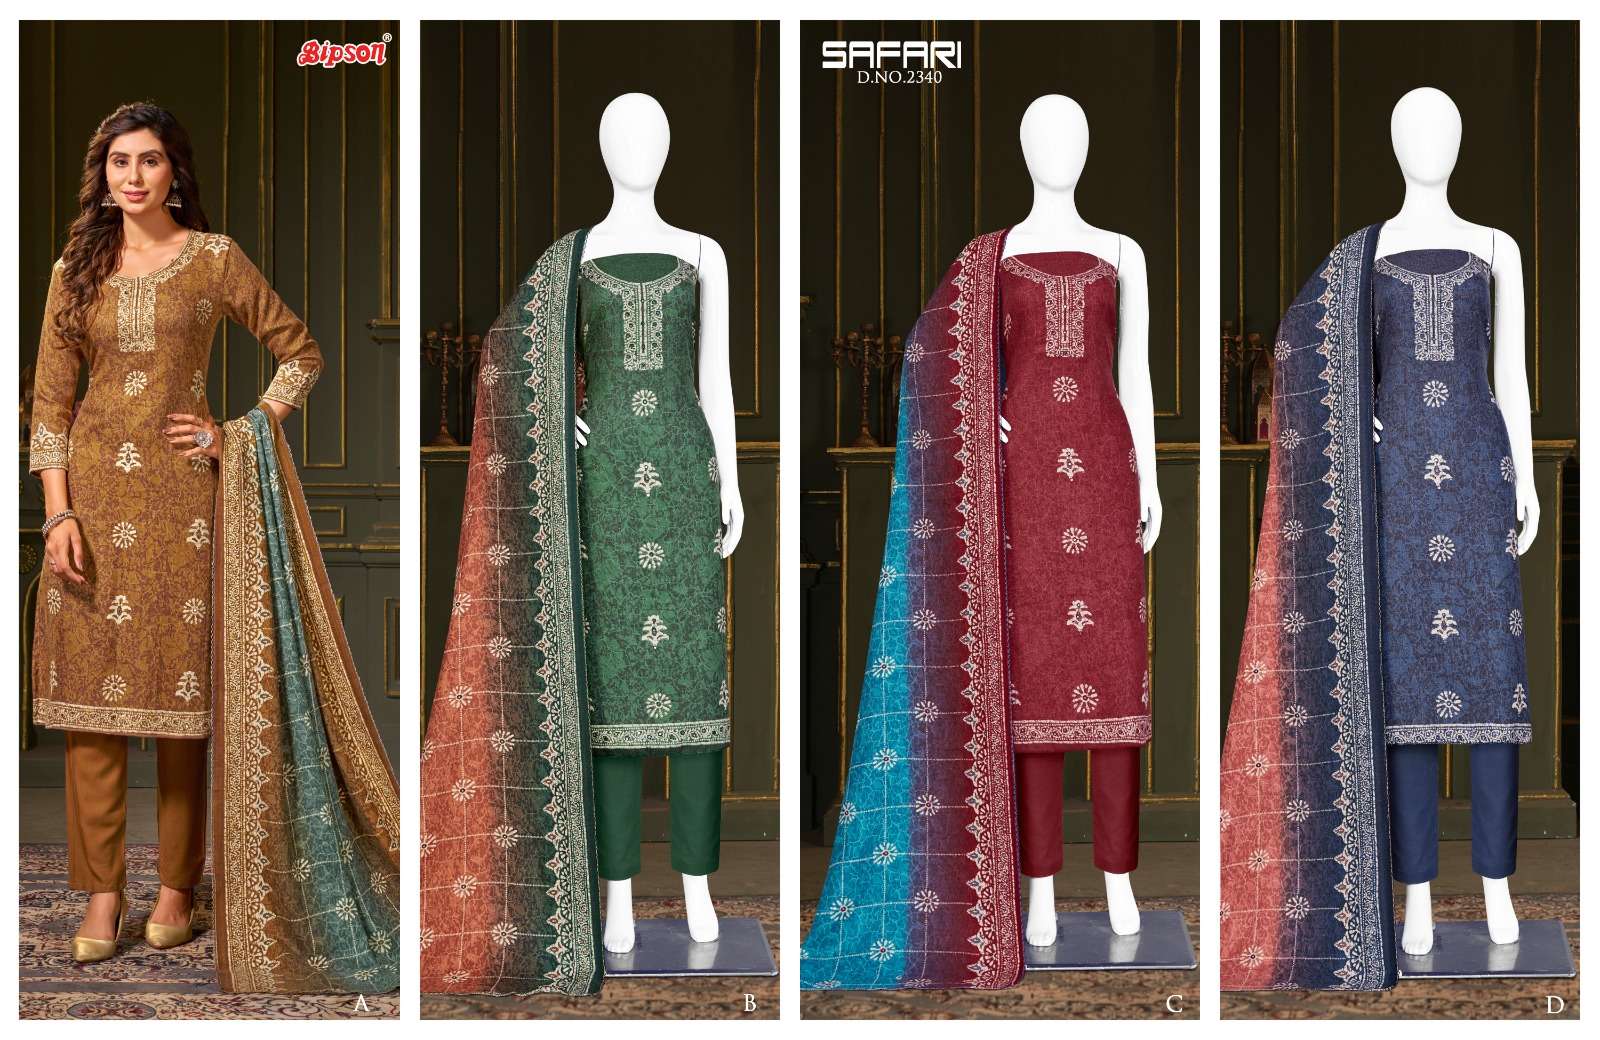 bipson safari 2340 colour series designer woollen pashmina winter catalogue wholesaler 